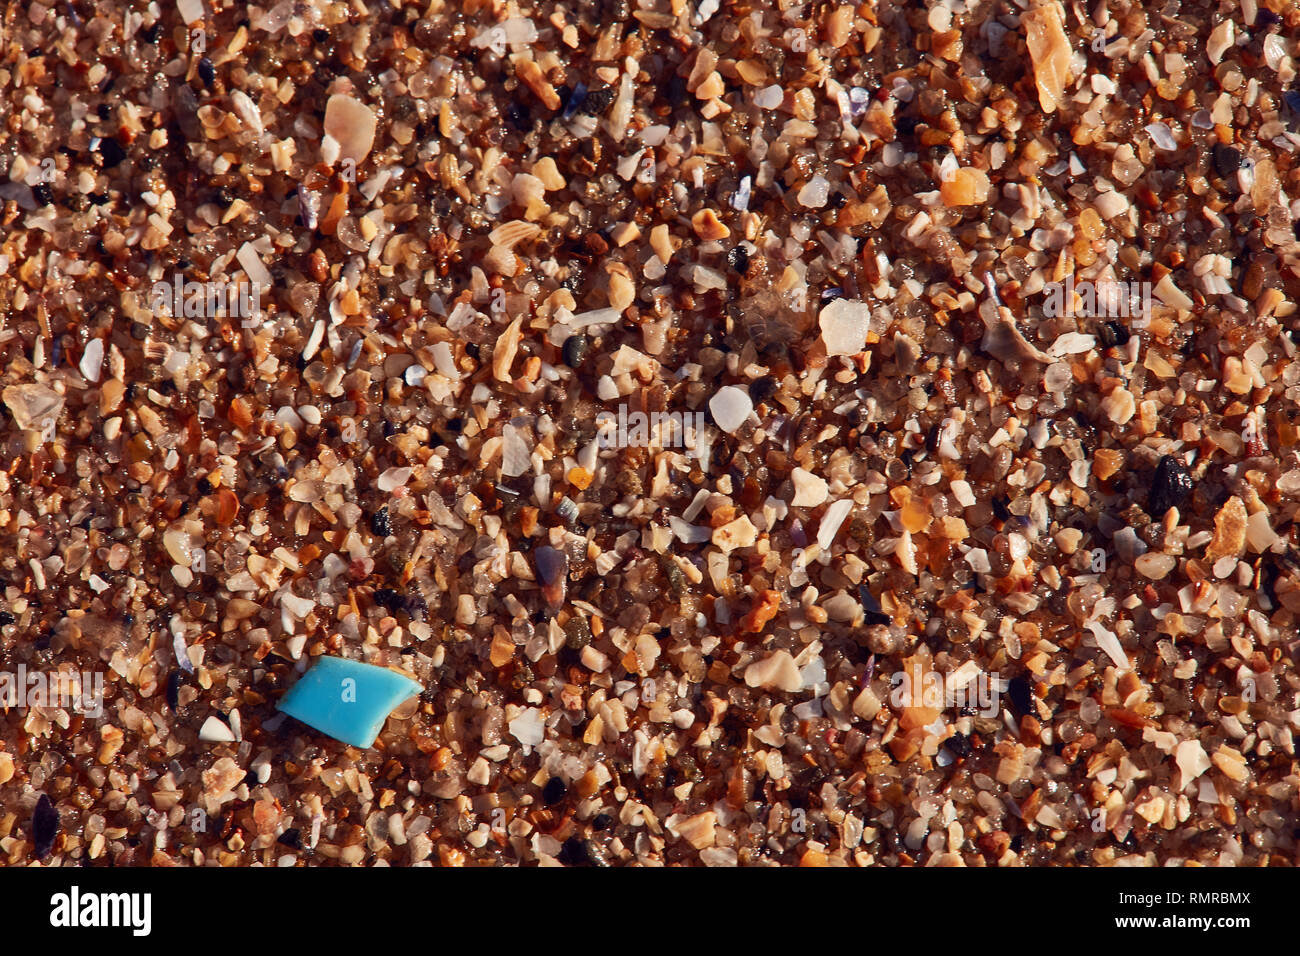 single micro plastic nurdle, blue, on sand Stock Photo